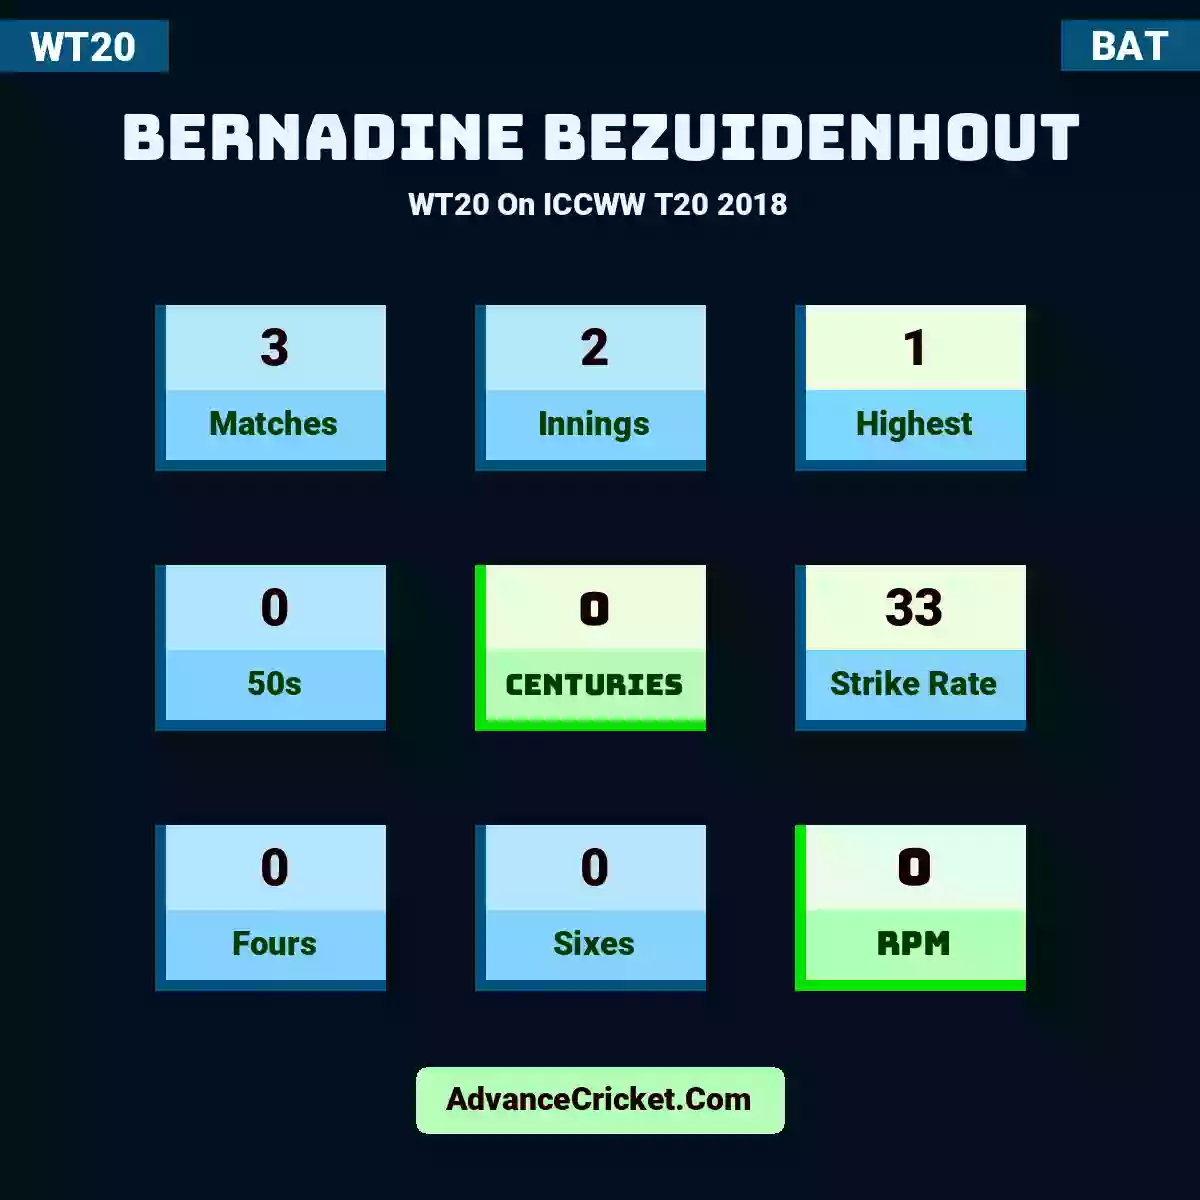 Bernadine Bezuidenhout WT20  On ICCWW T20 2018, Bernadine Bezuidenhout played 3 matches, scored 1 runs as highest, 0 half-centuries, and 0 centuries, with a strike rate of 33. B.Bezuidenhout hit 0 fours and 0 sixes, with an RPM of 0.